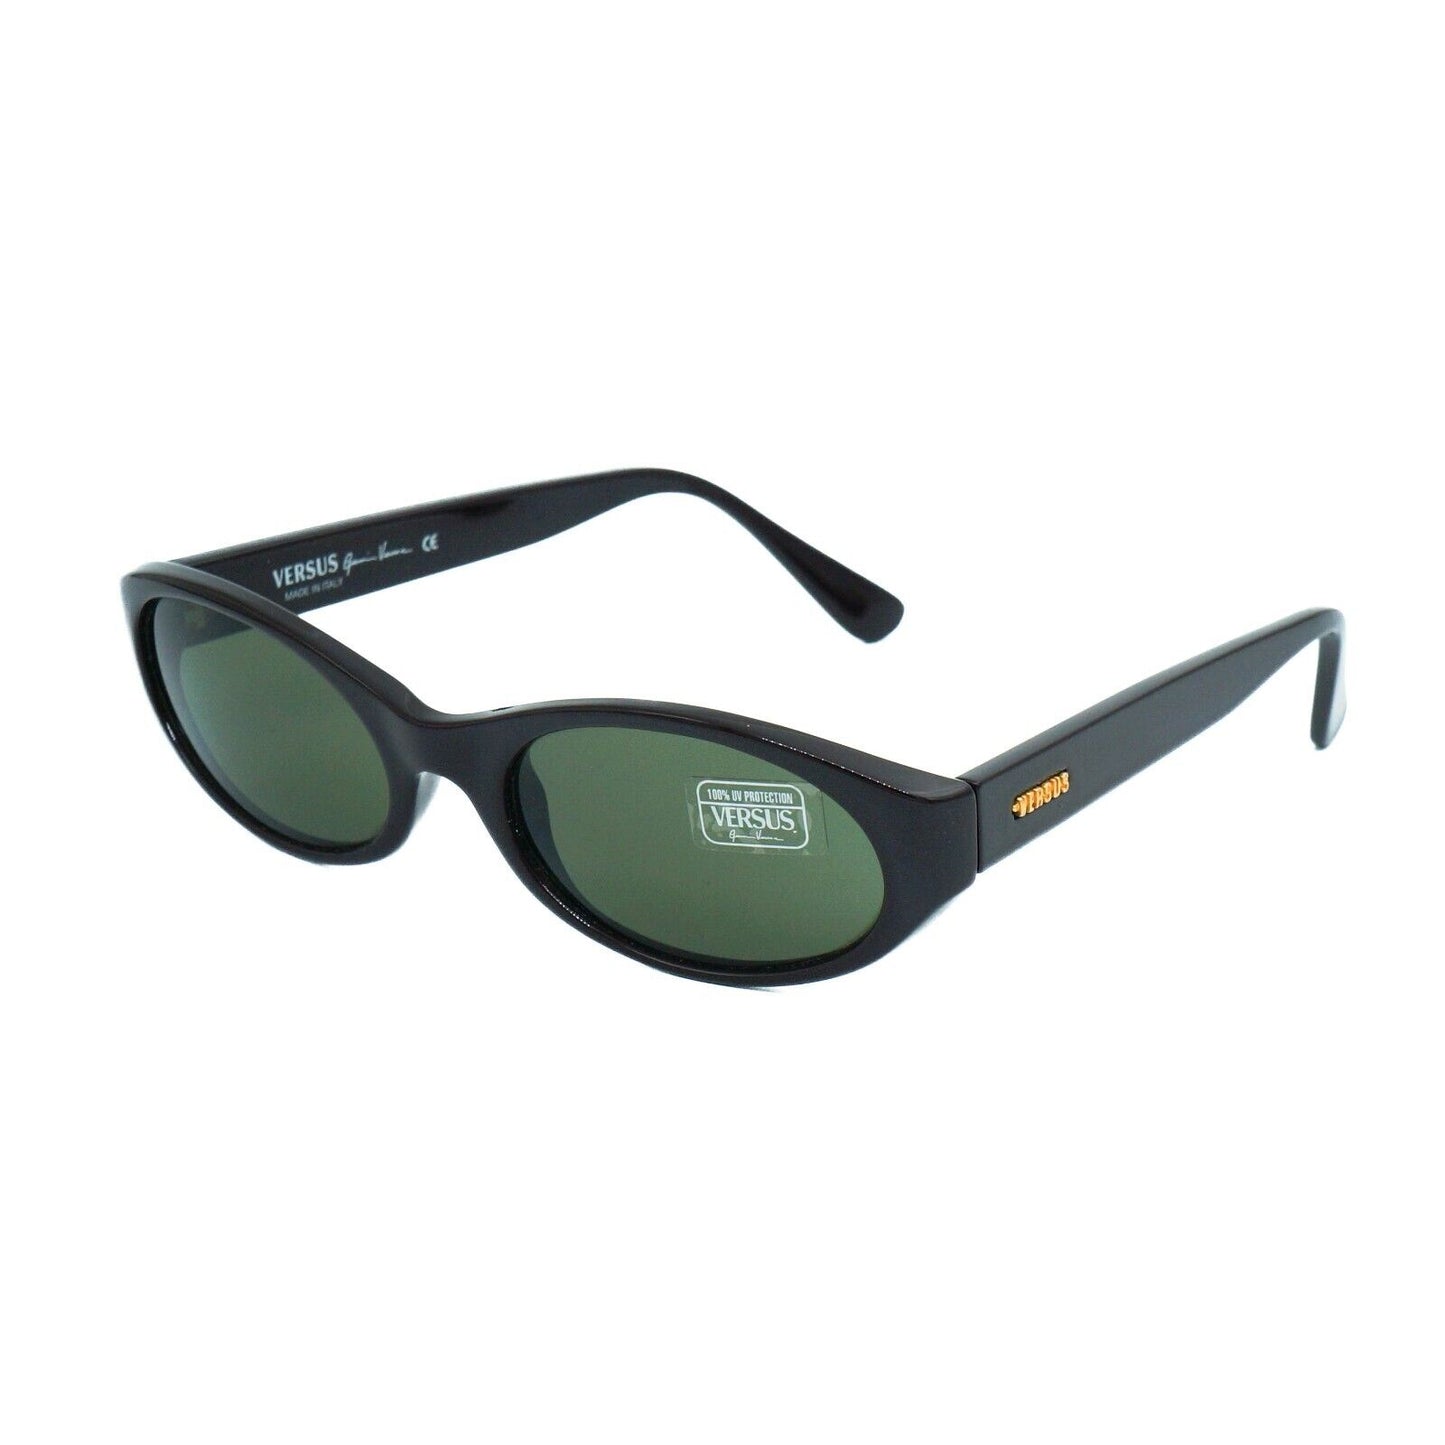 VERSUS Gianni Versace E69 Oval Black Sunglasses Vintage 90s 00s